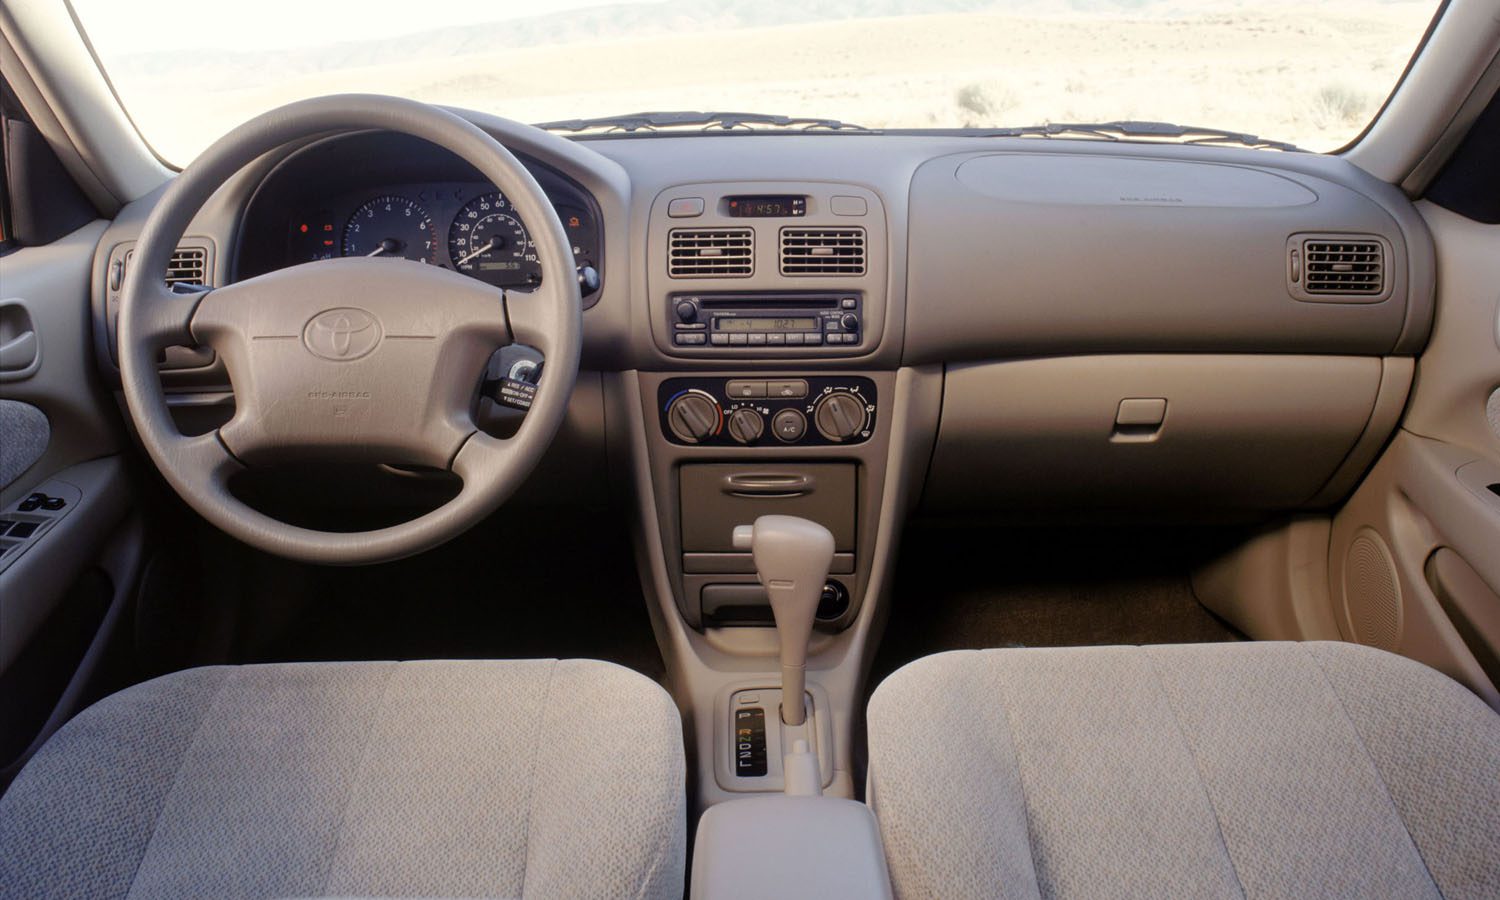 2002 Toyota Corolla LE Interior 002 - Toyota USA Newsroom